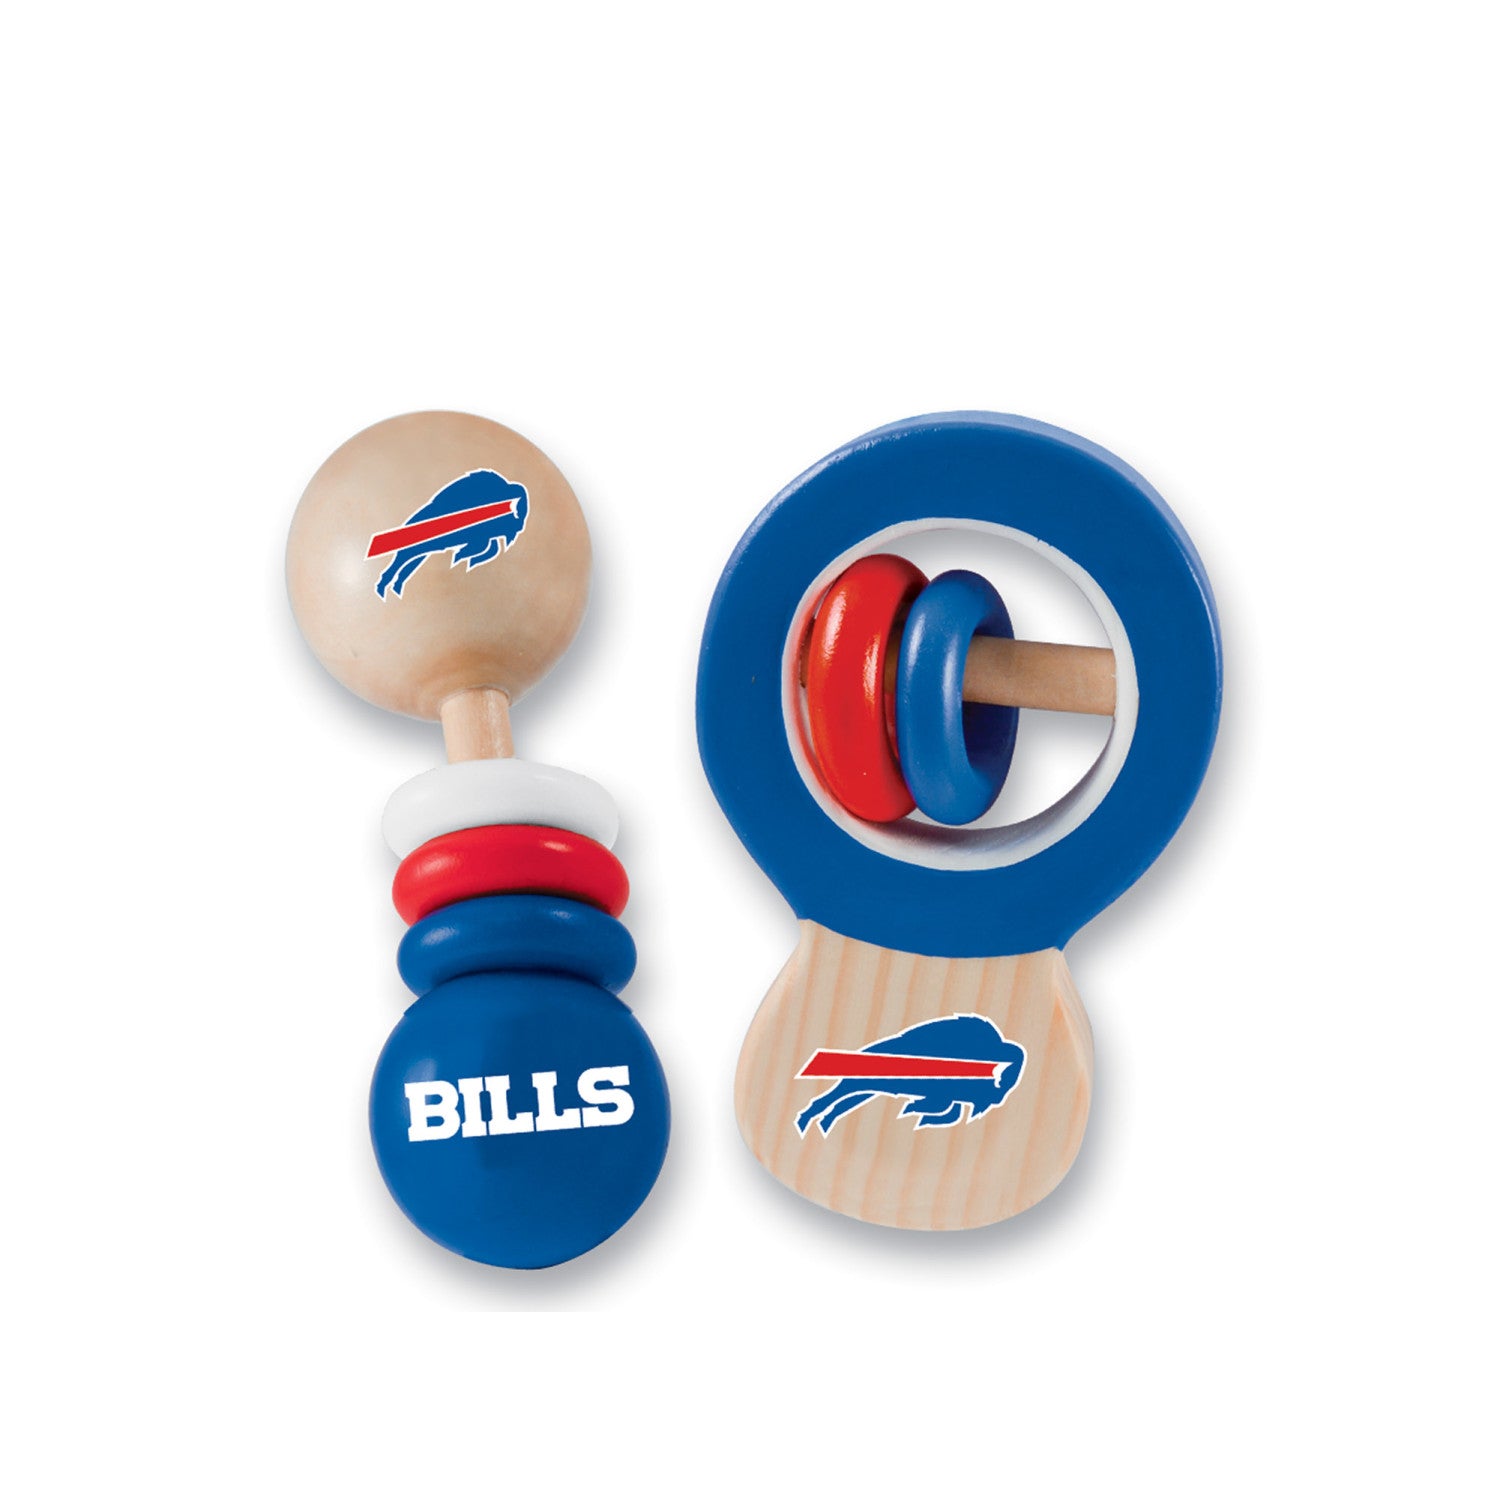 Buffalo Bills - Baby Rattles 2-Pack